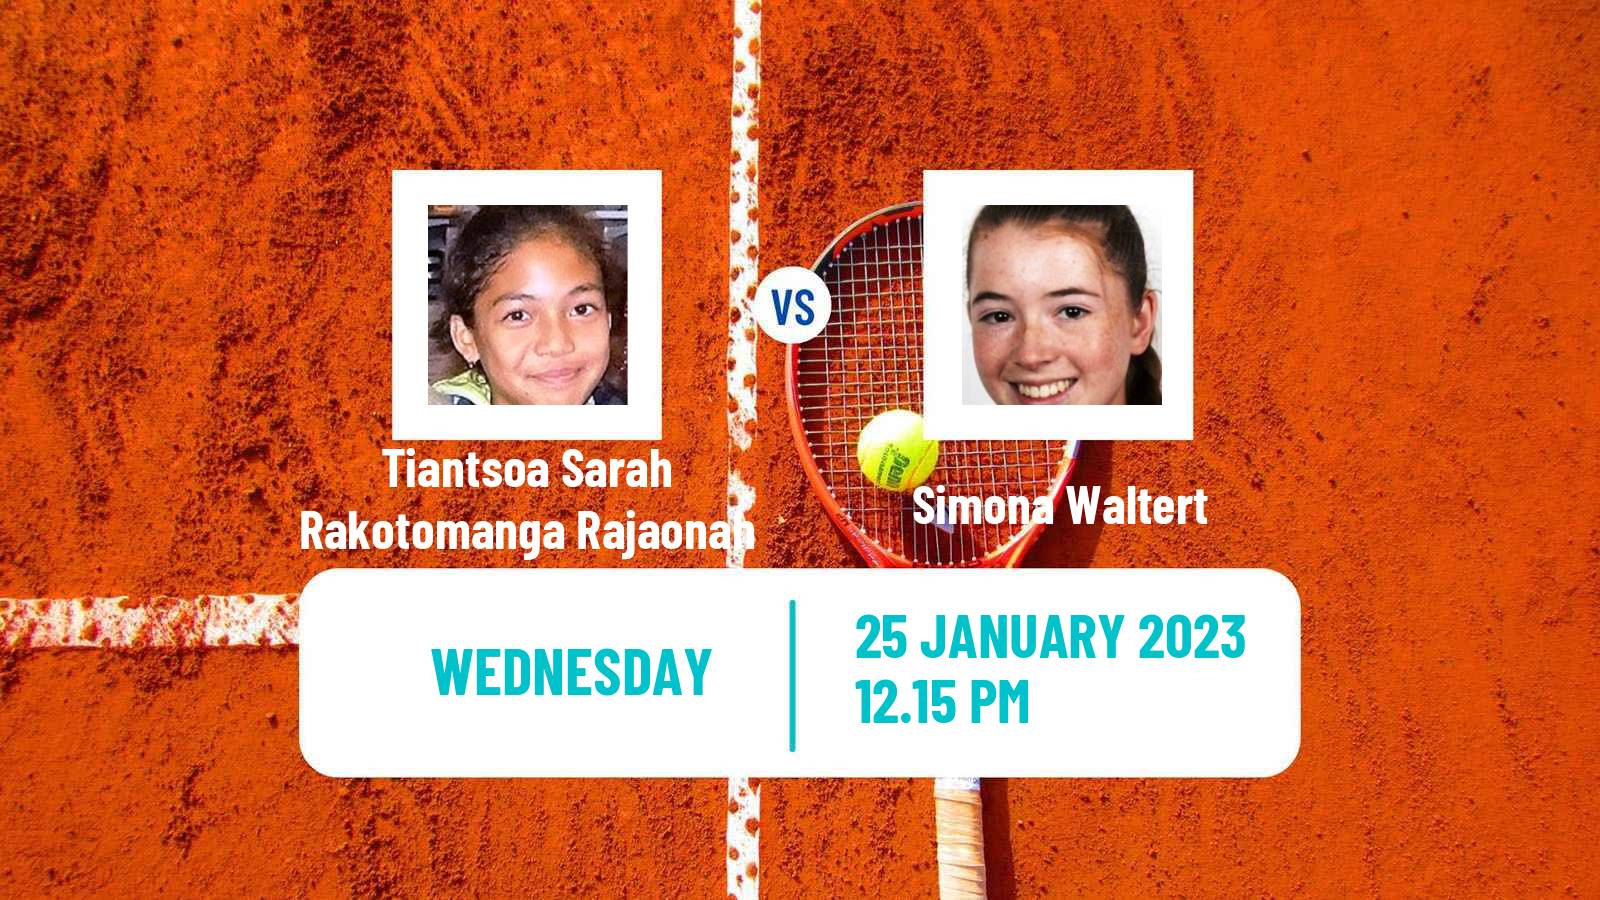 Tennis ITF Tournaments Tiantsoa Sarah Rakotomanga Rajaonah - Simona Waltert